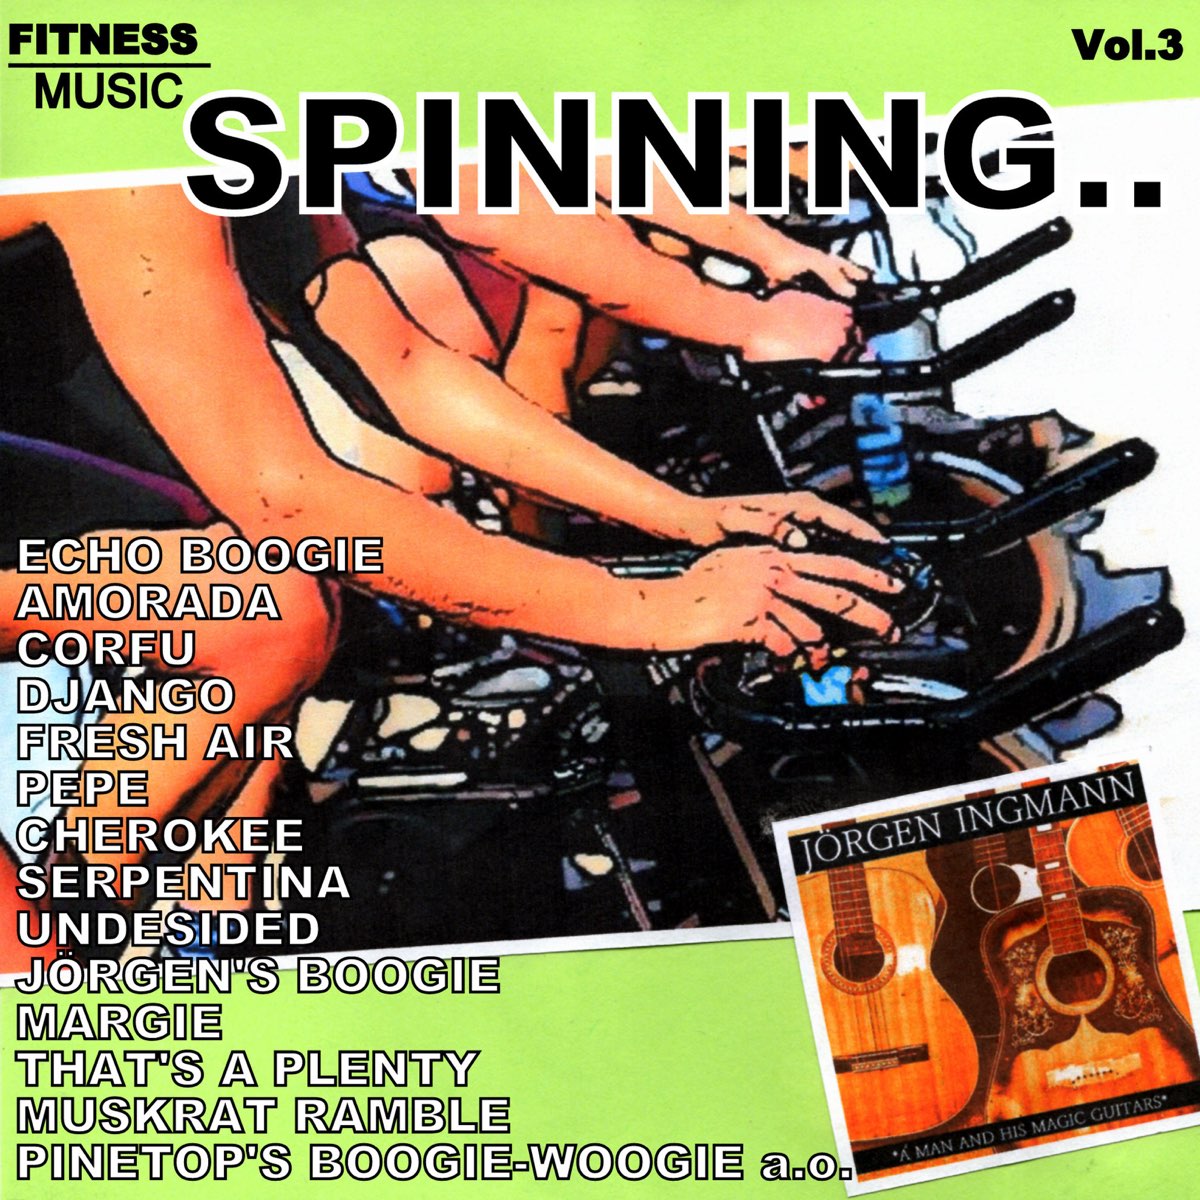 Spinning музыка. Spin Music. Spin Music конференция. Ingmann, Jorgen_Apache «7'' 45 RPM Single» [1961] album Cover.